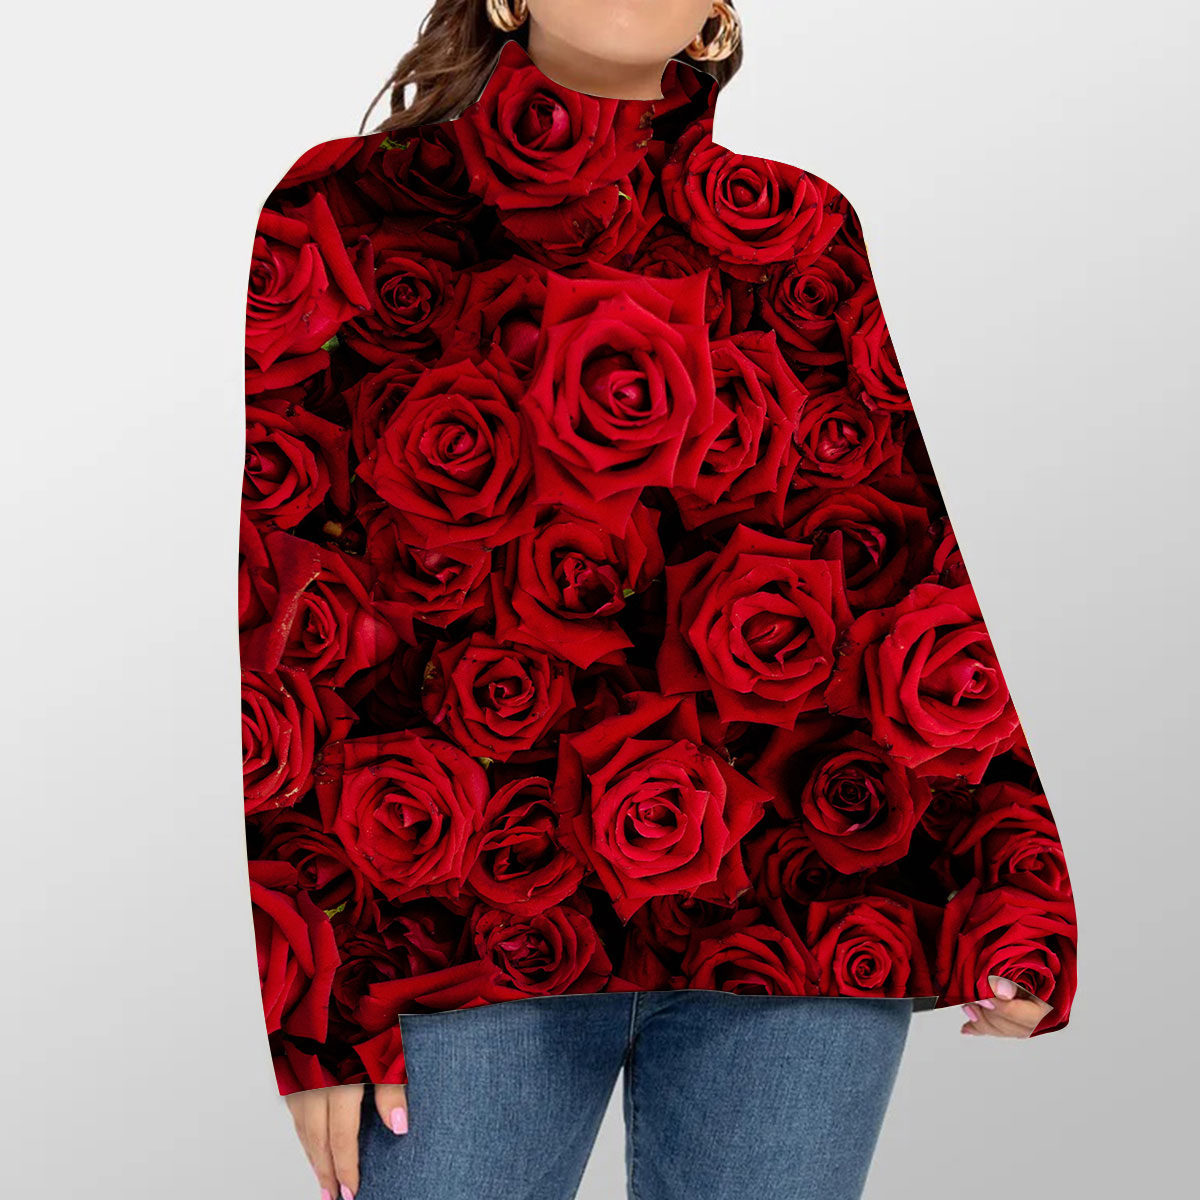 Plenty Of Rose Turtleneck Sweater_1_2.1